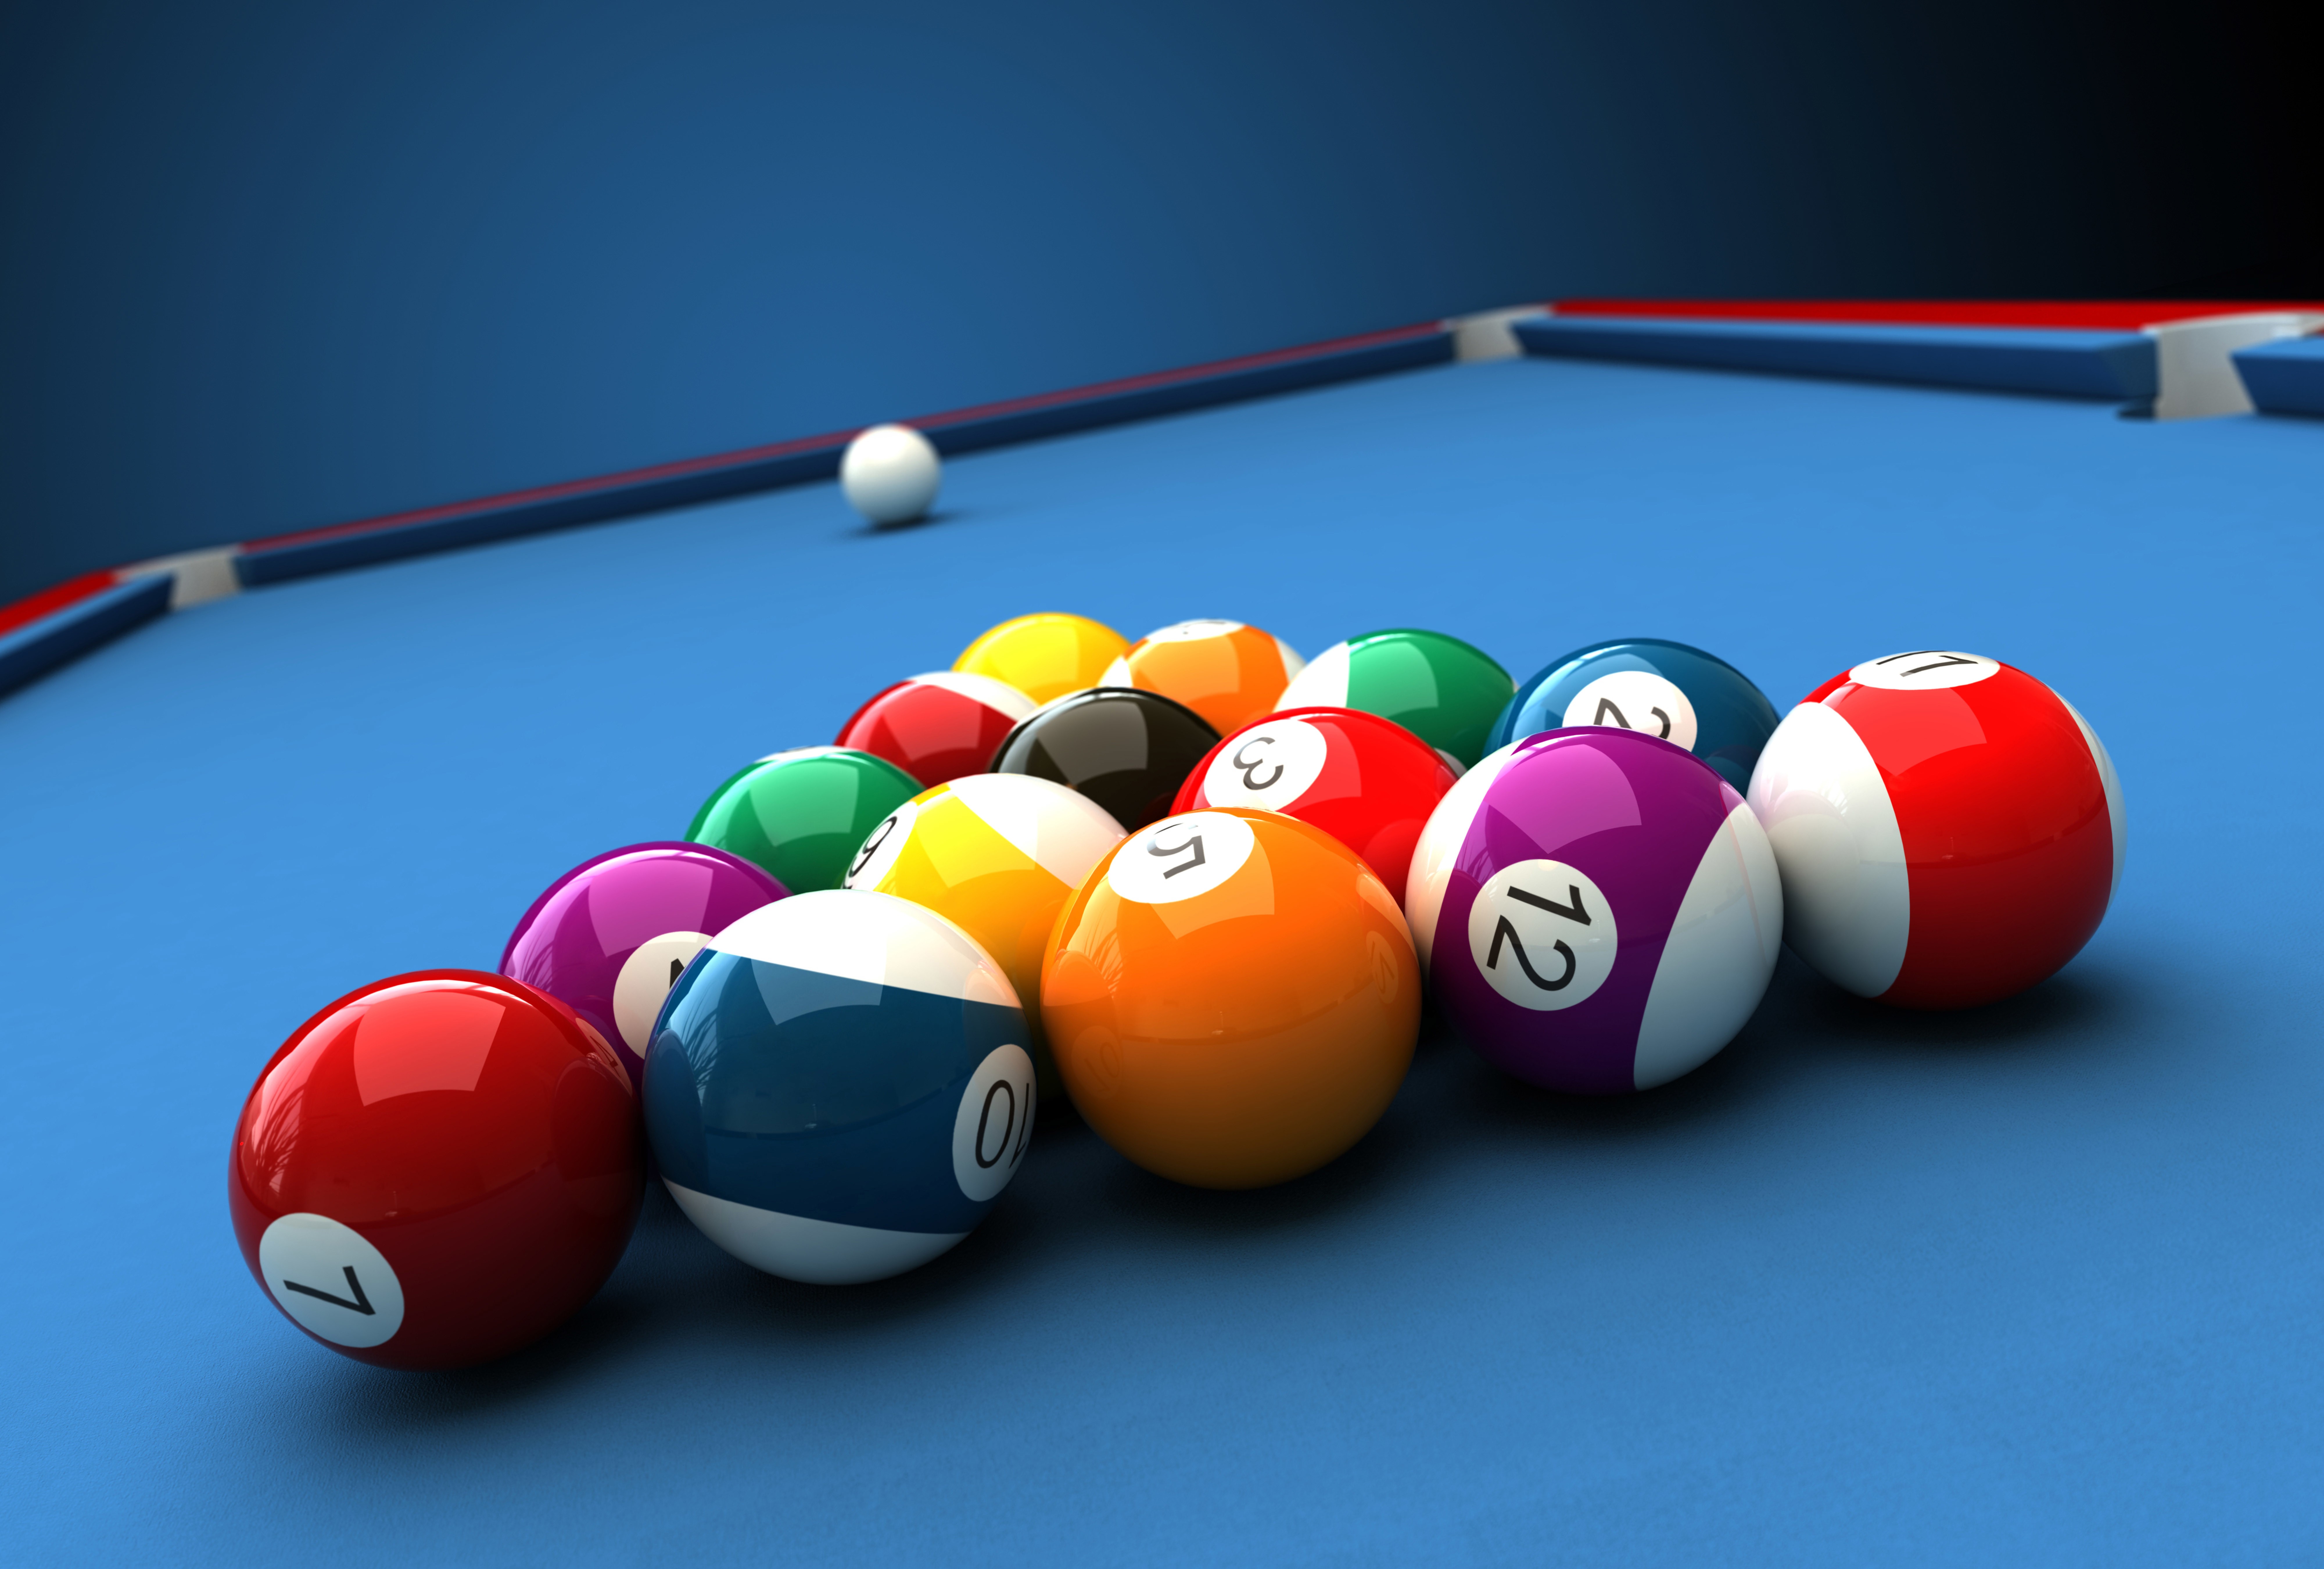 General 8000x5400 billiard balls pool table ball colorful numbers closeup depth of field CGI